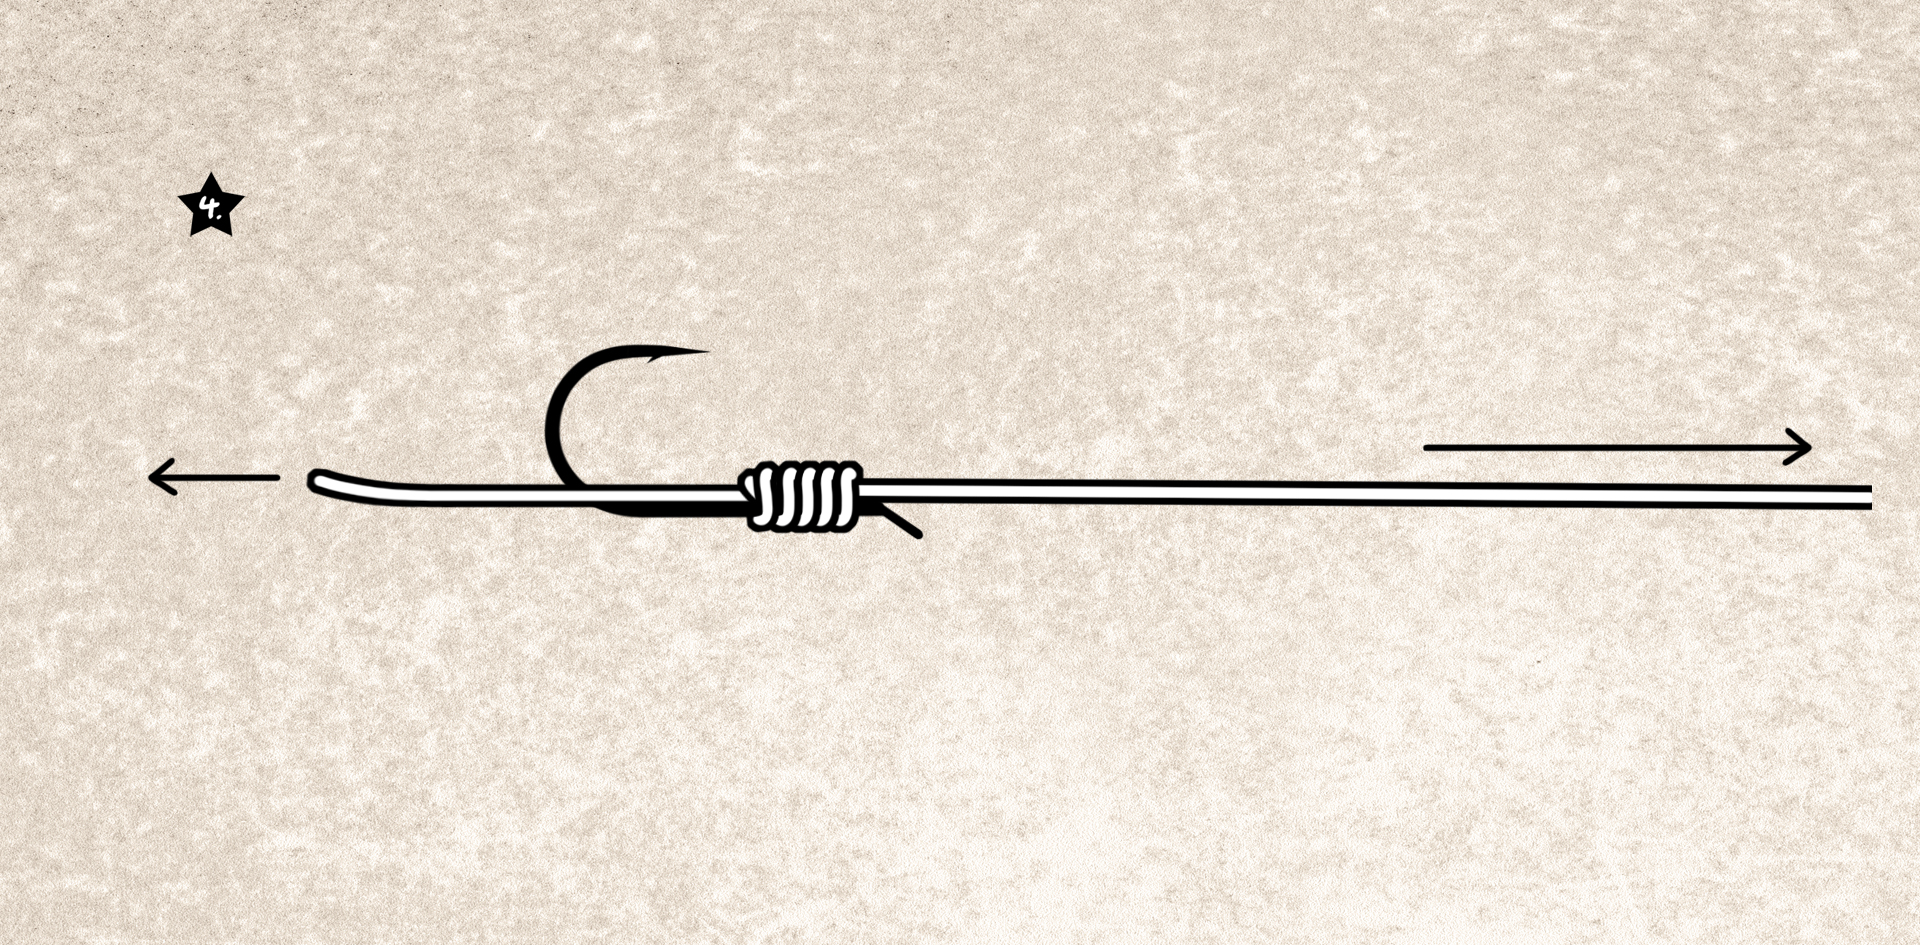 Plättchenhaken-Knoten binden